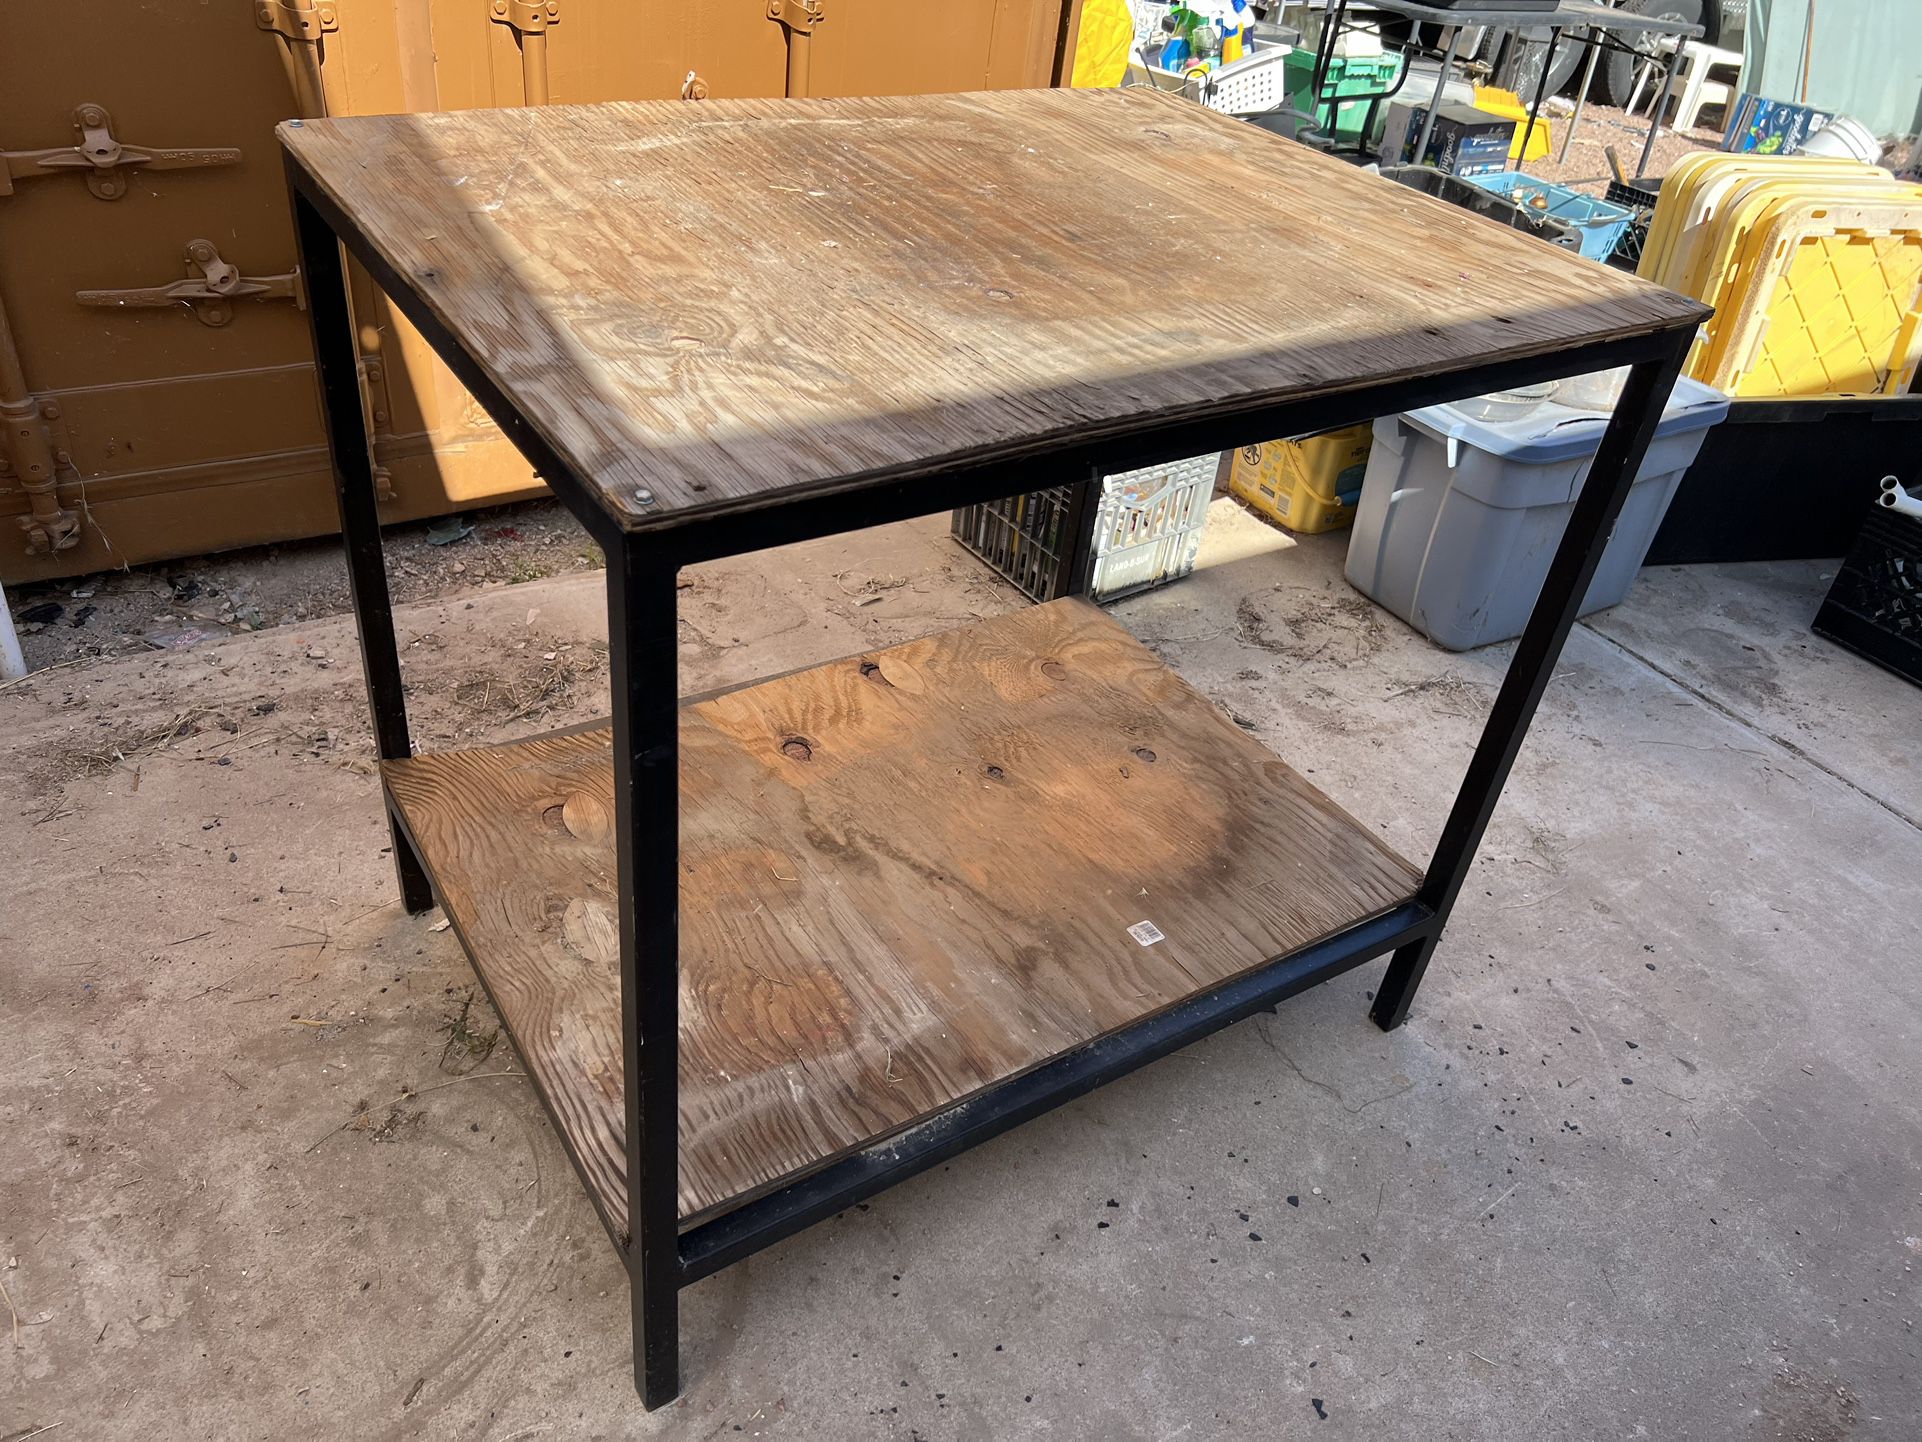 Metal Framed Work Table